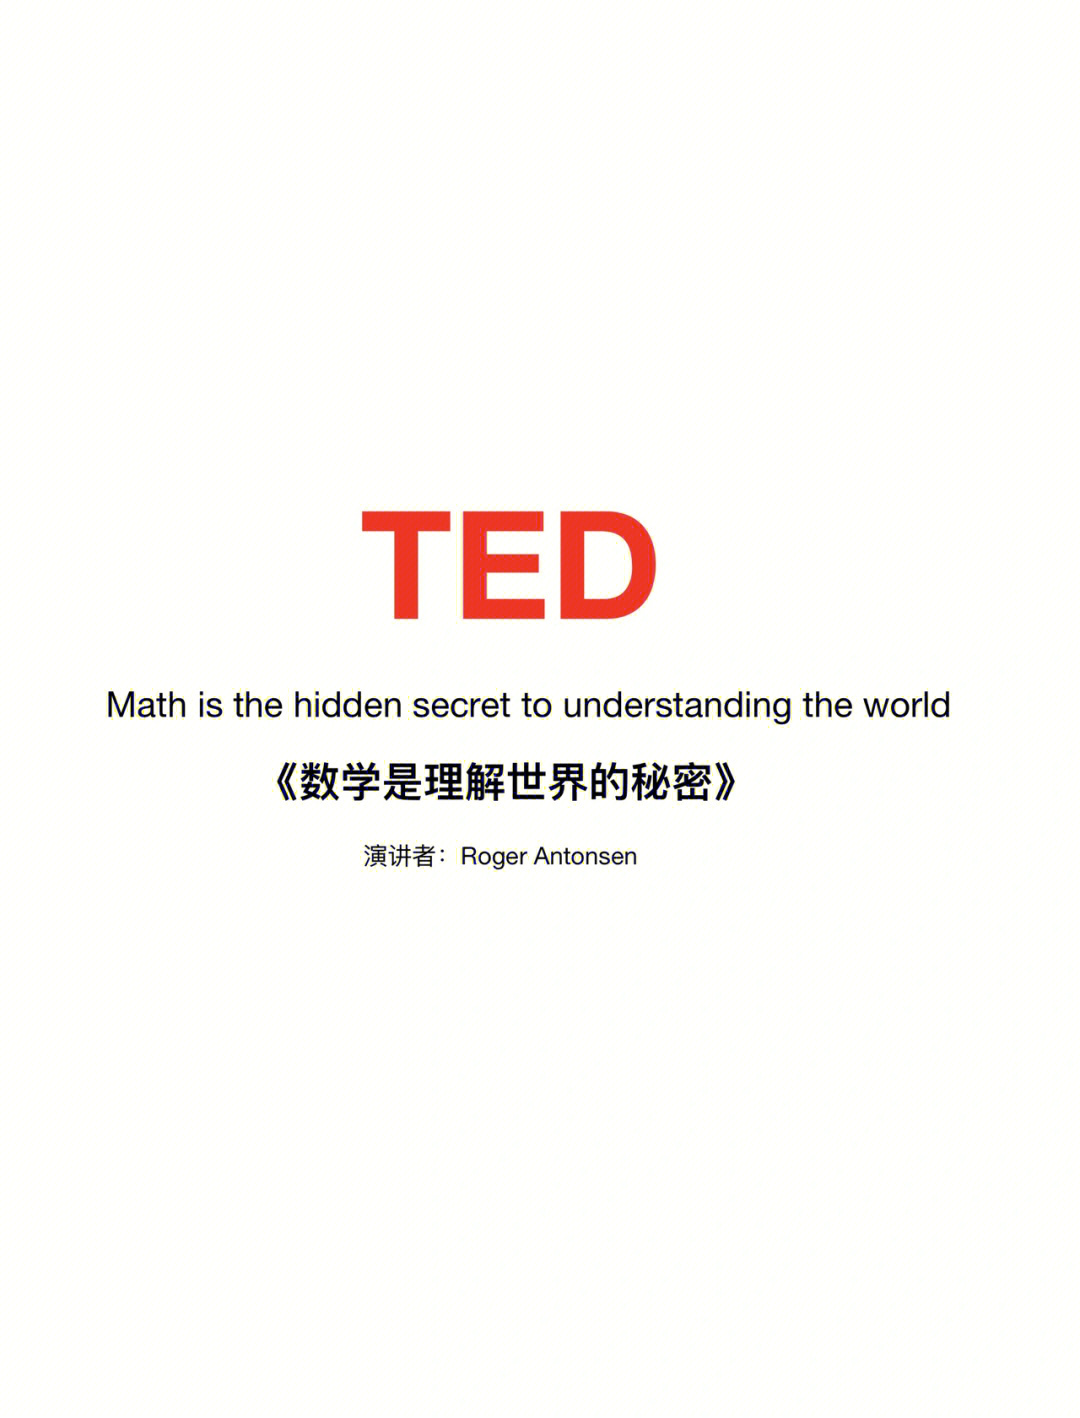 ted演讲day4数学是理解世界的秘密92